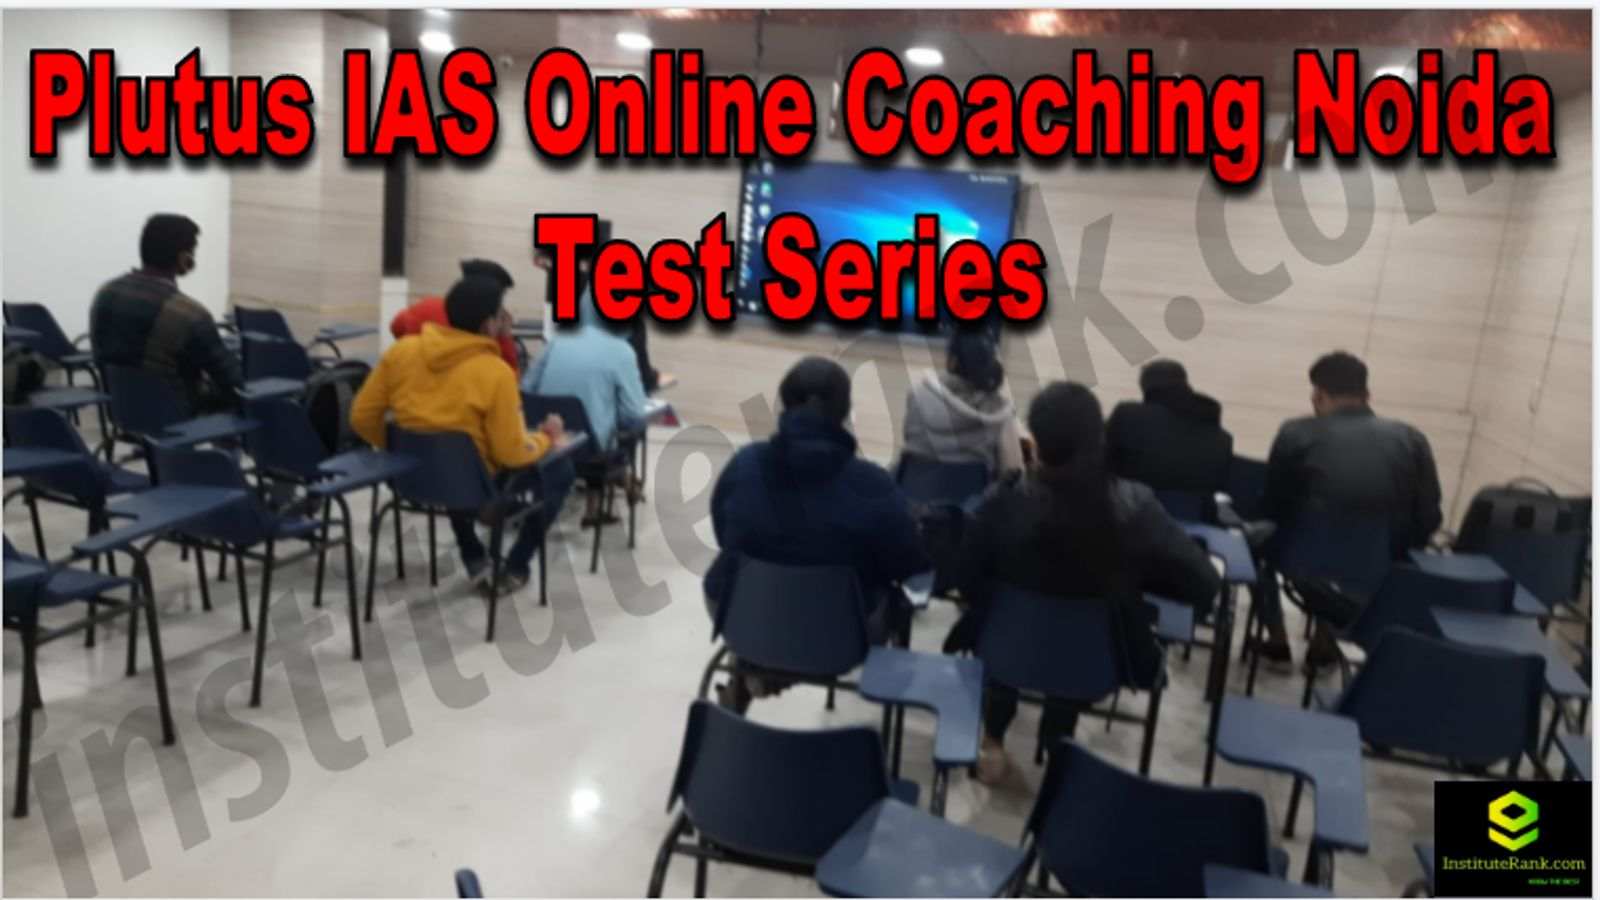 Plutus IAS Online Coaching Noida Reviews Test Series